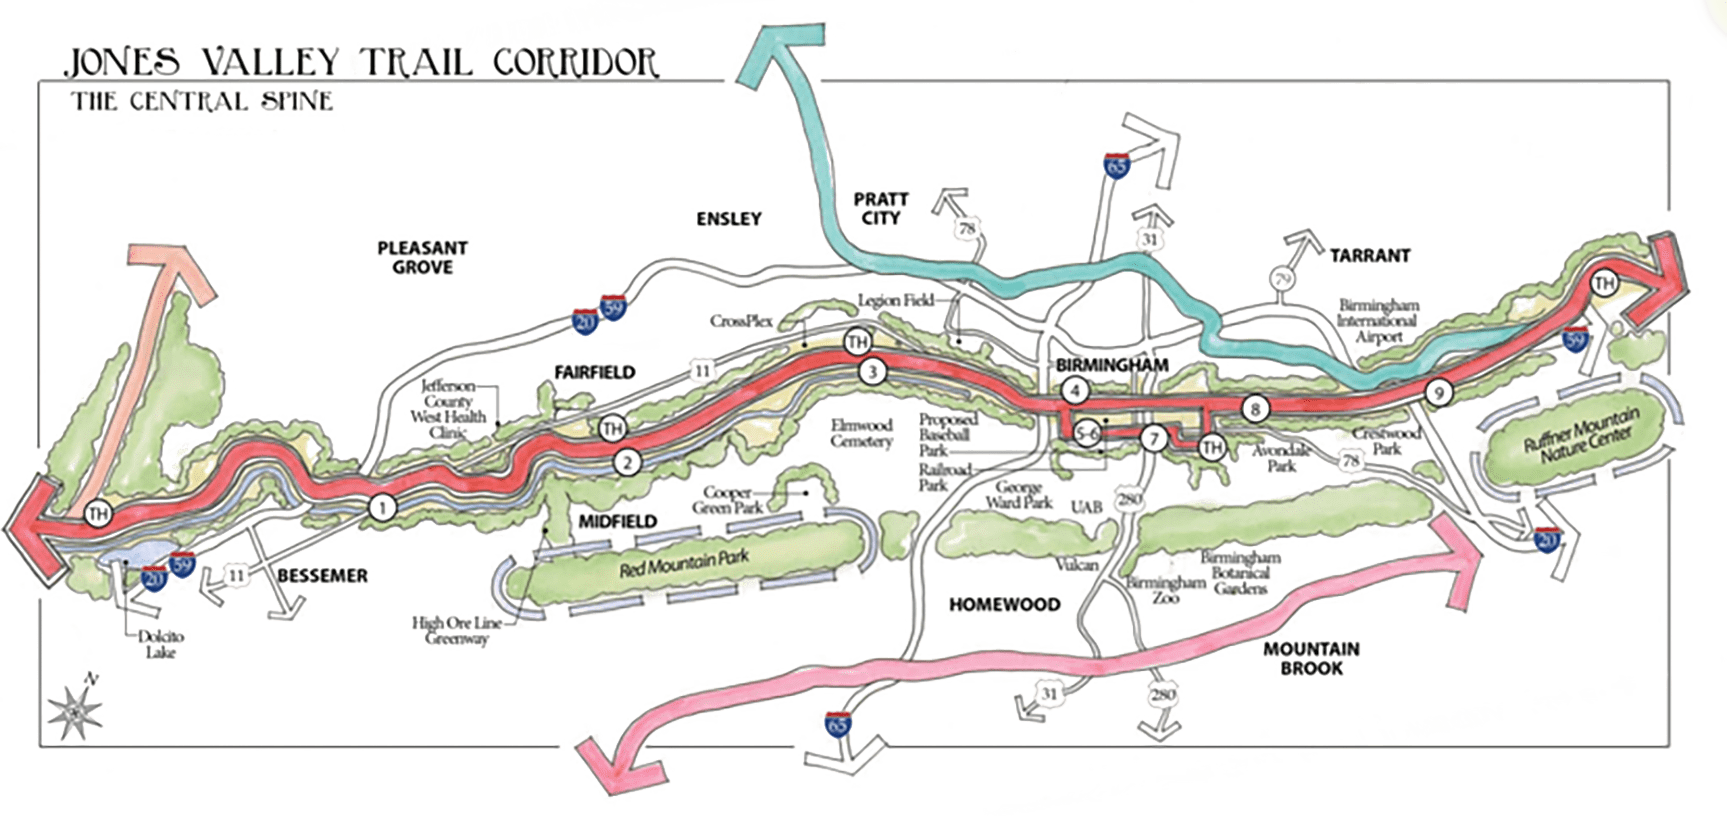 Jones Valley Trail Map